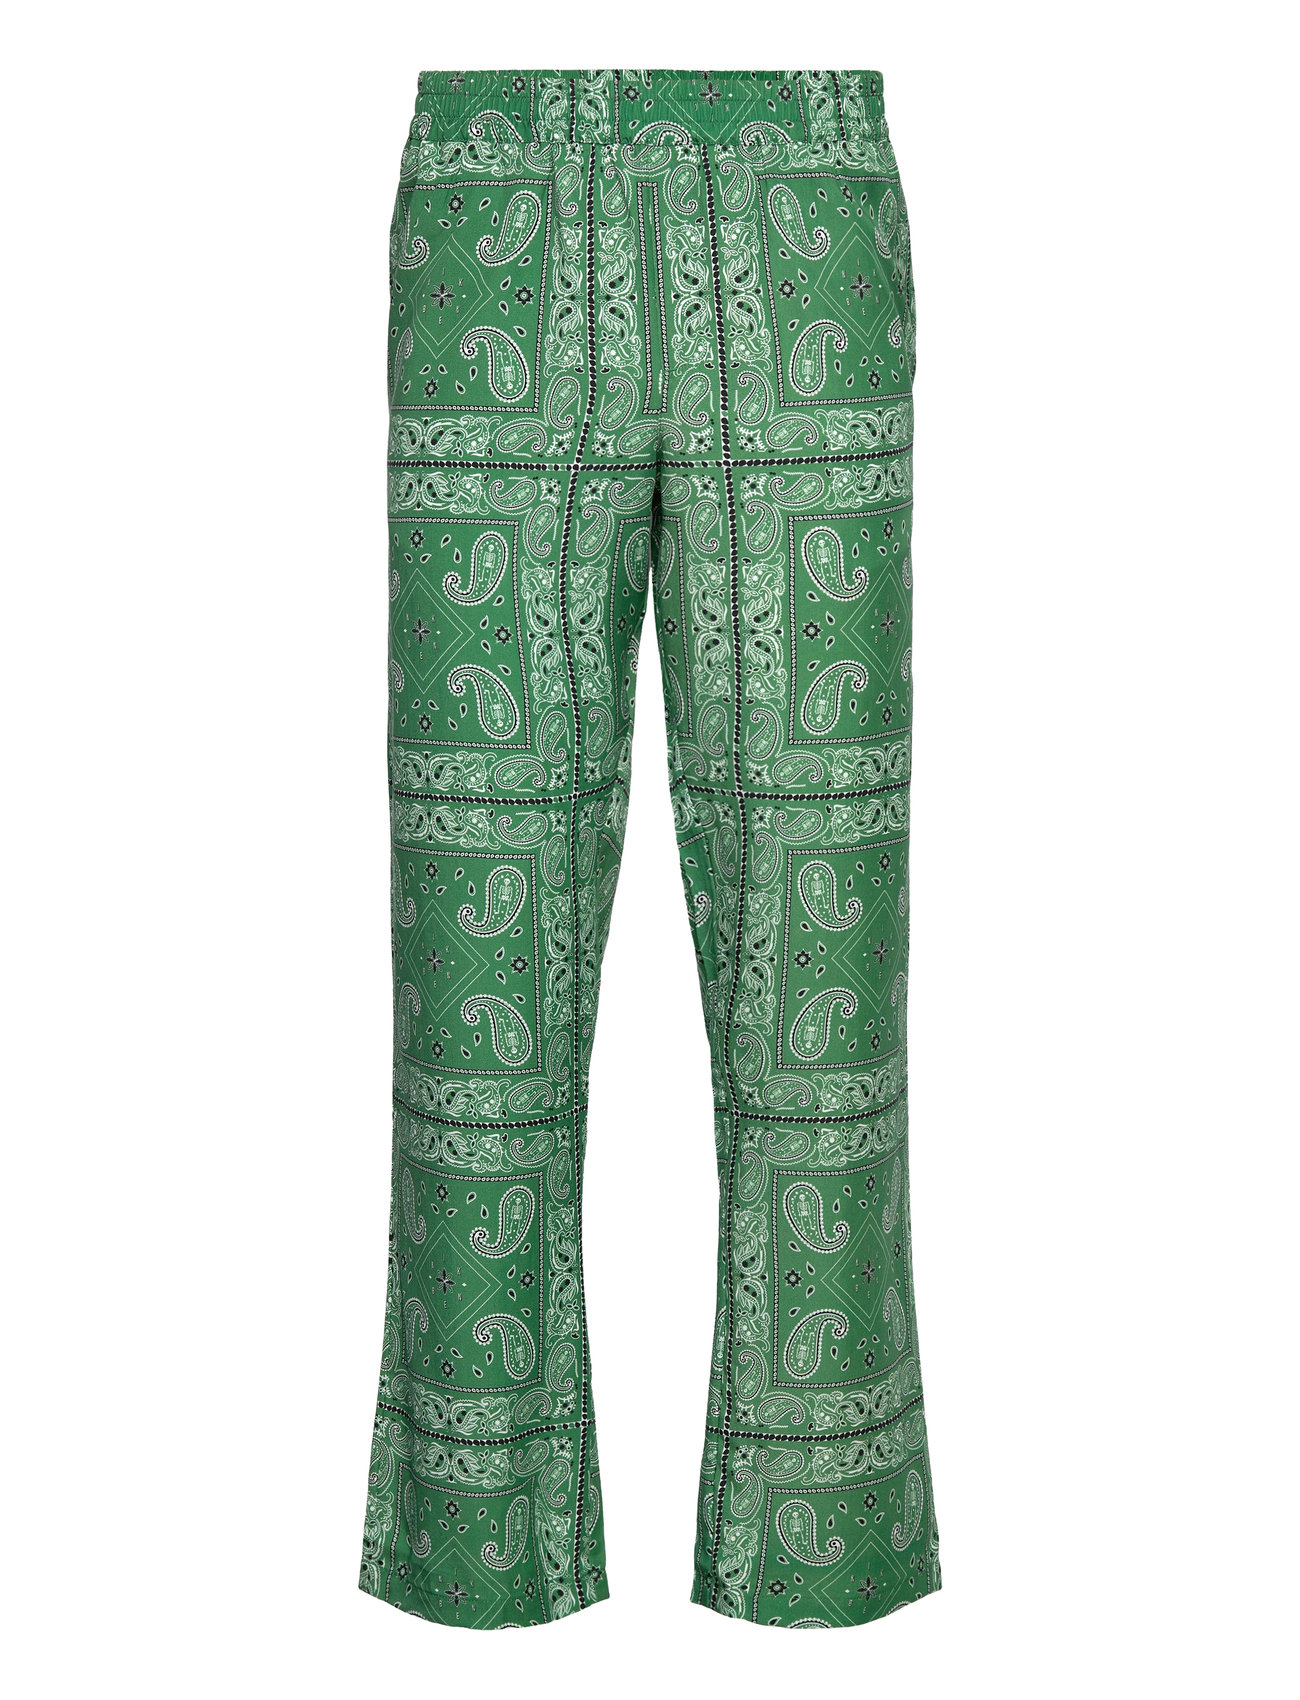 Nb El Pino Pants Green Designers Trousers Casual Green Nikben